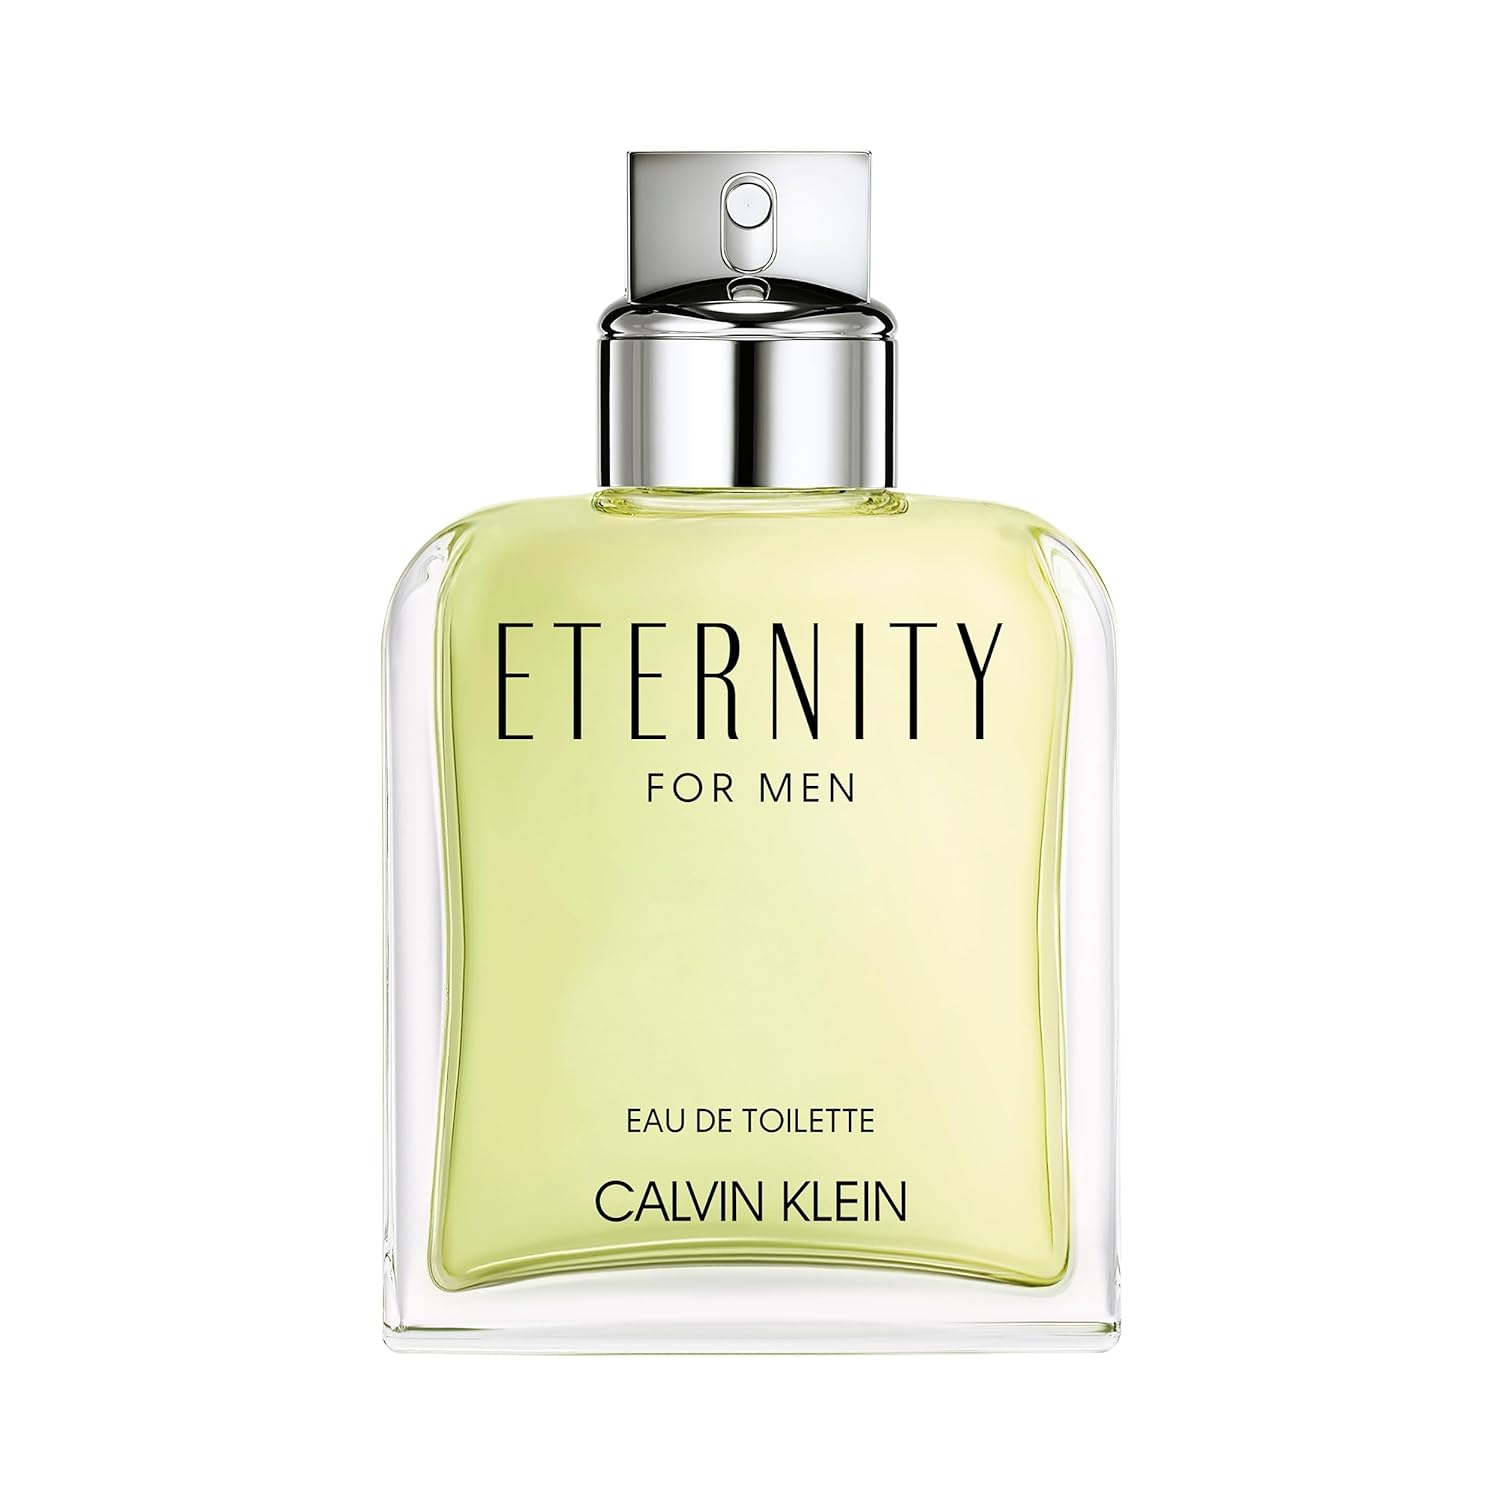 Calvin Klein Eternity for Men Eau De Toilette Cologne - Notes of Bergamot, Geranium, Sandalwood, and Amber